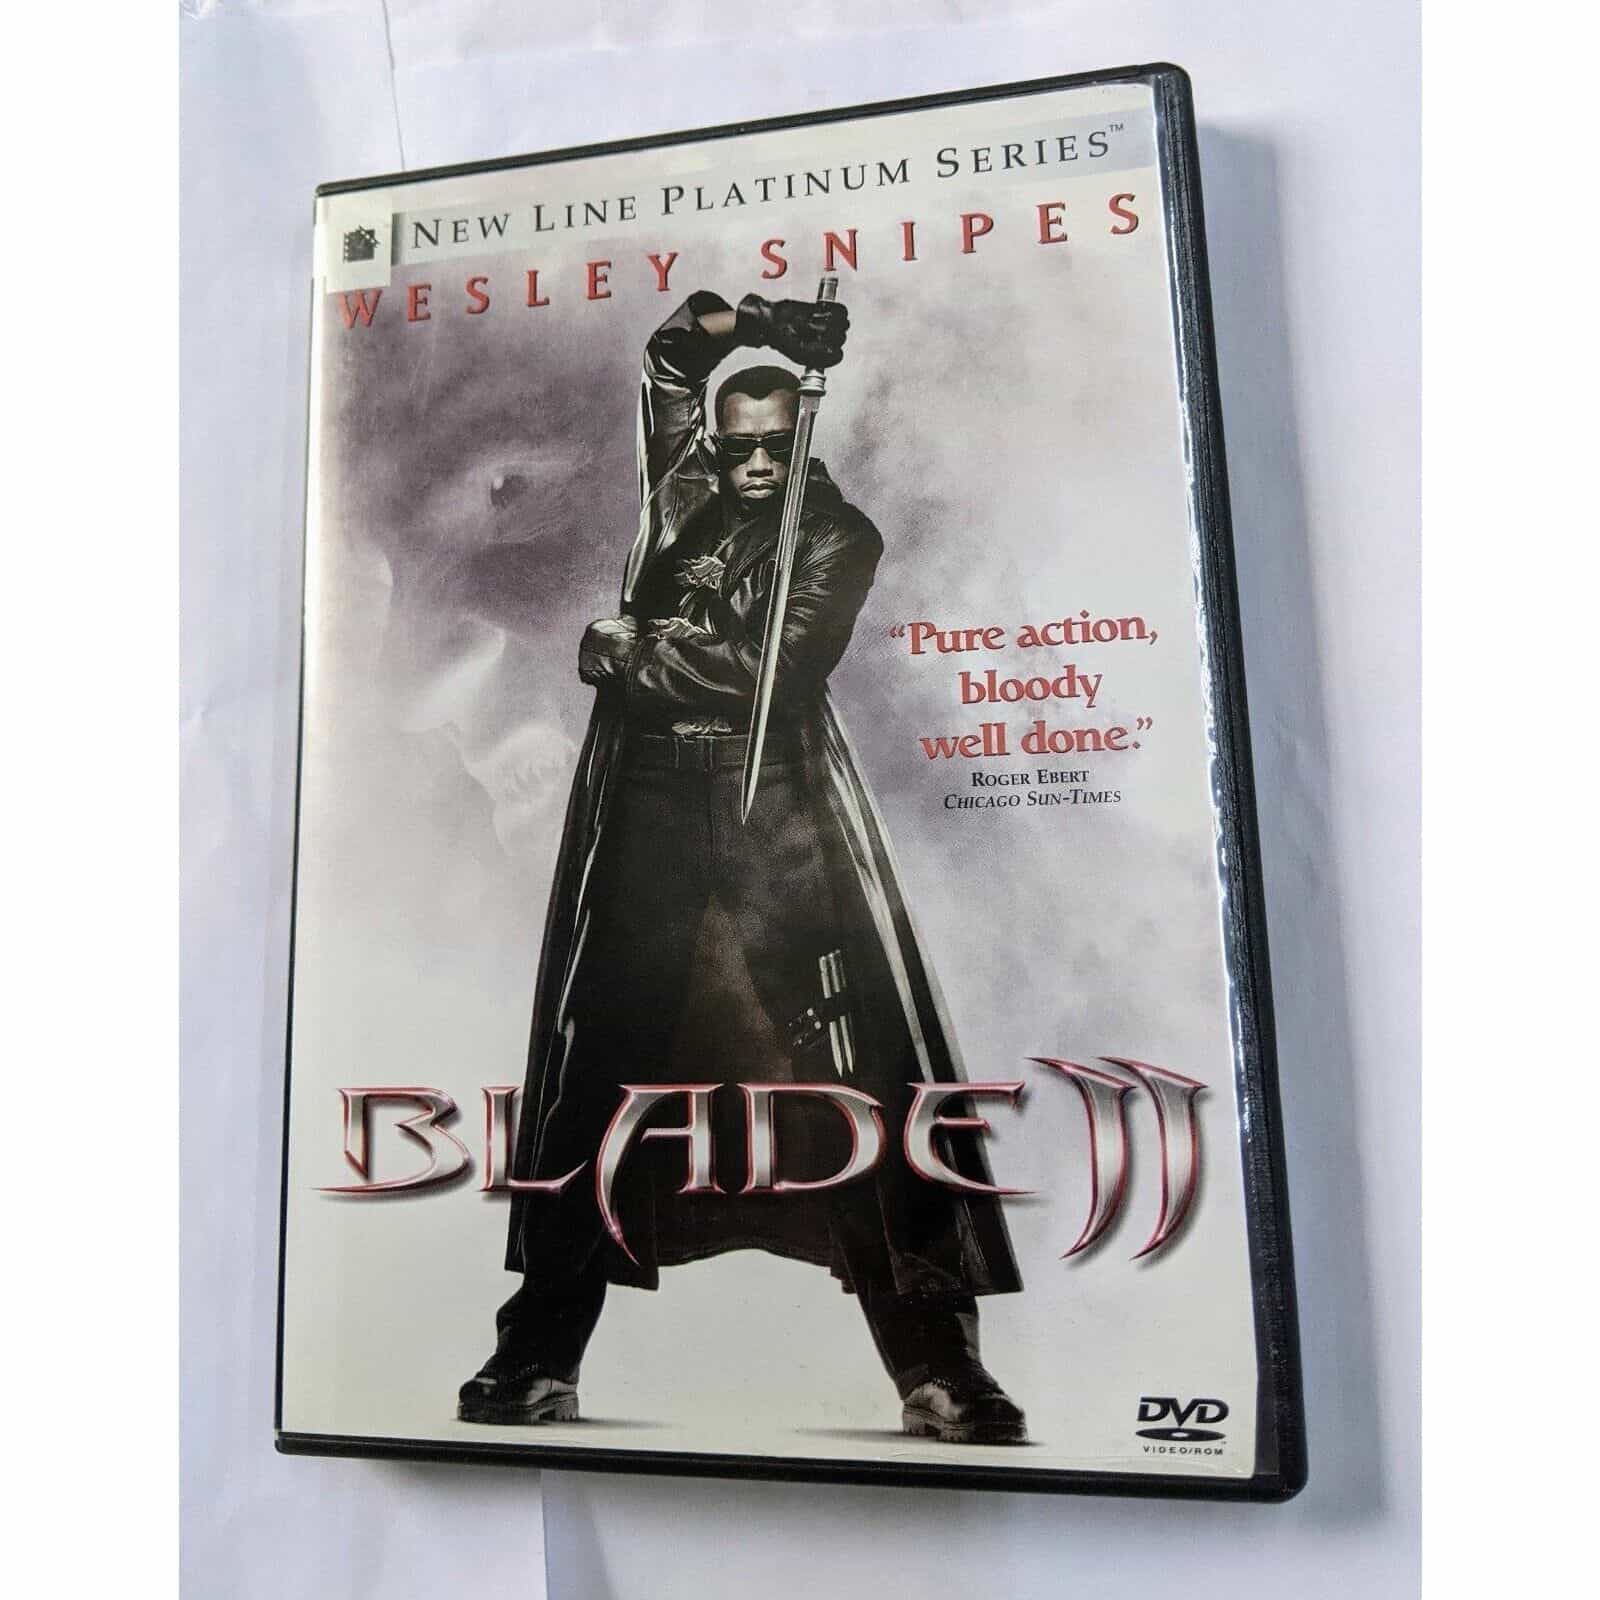 Blade II DVD Movie